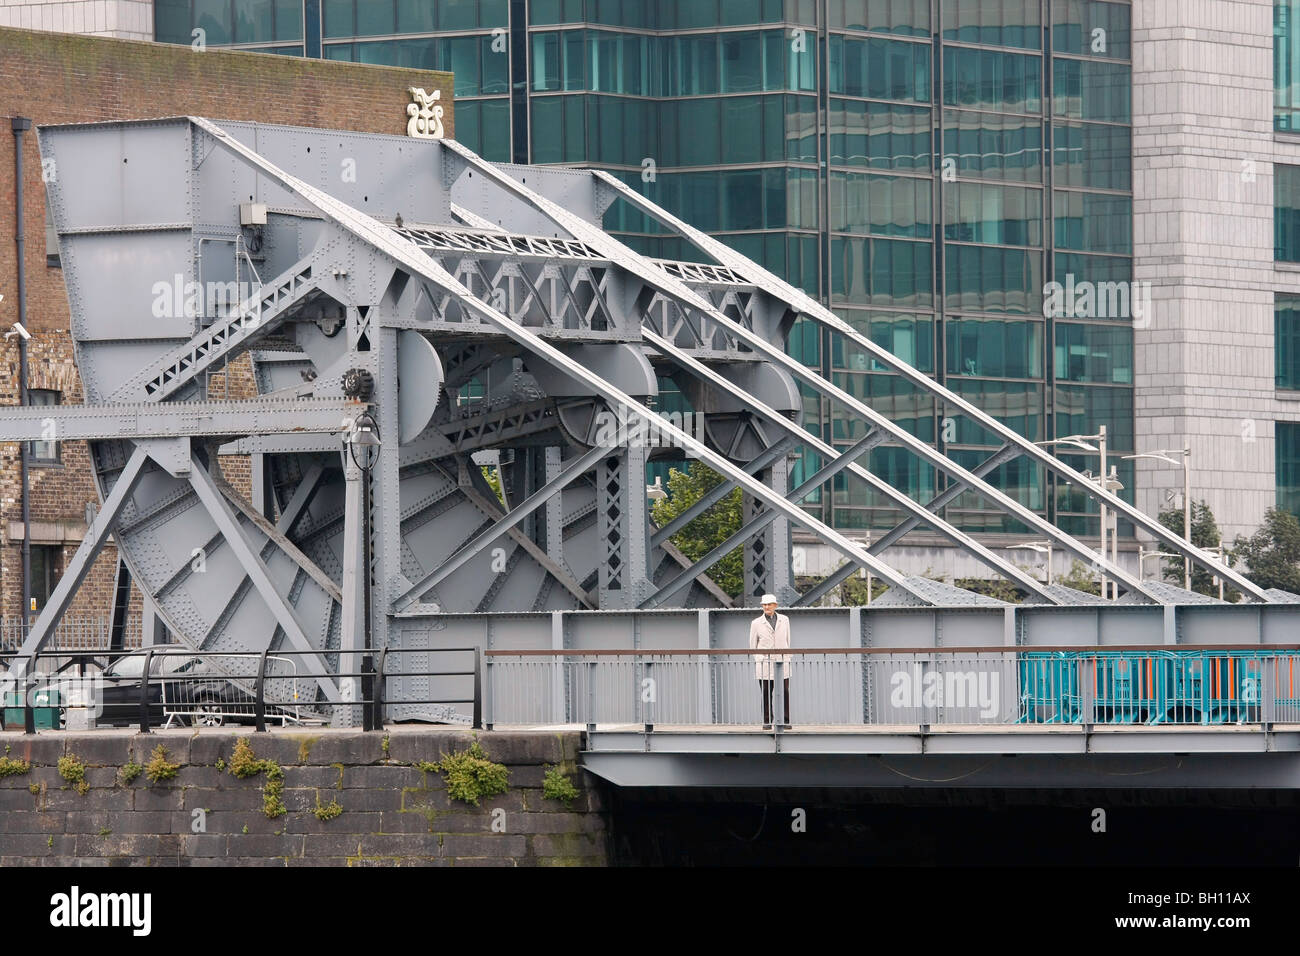 Zugbrücke am Georges Dock, Dublin Irland. Stockfoto